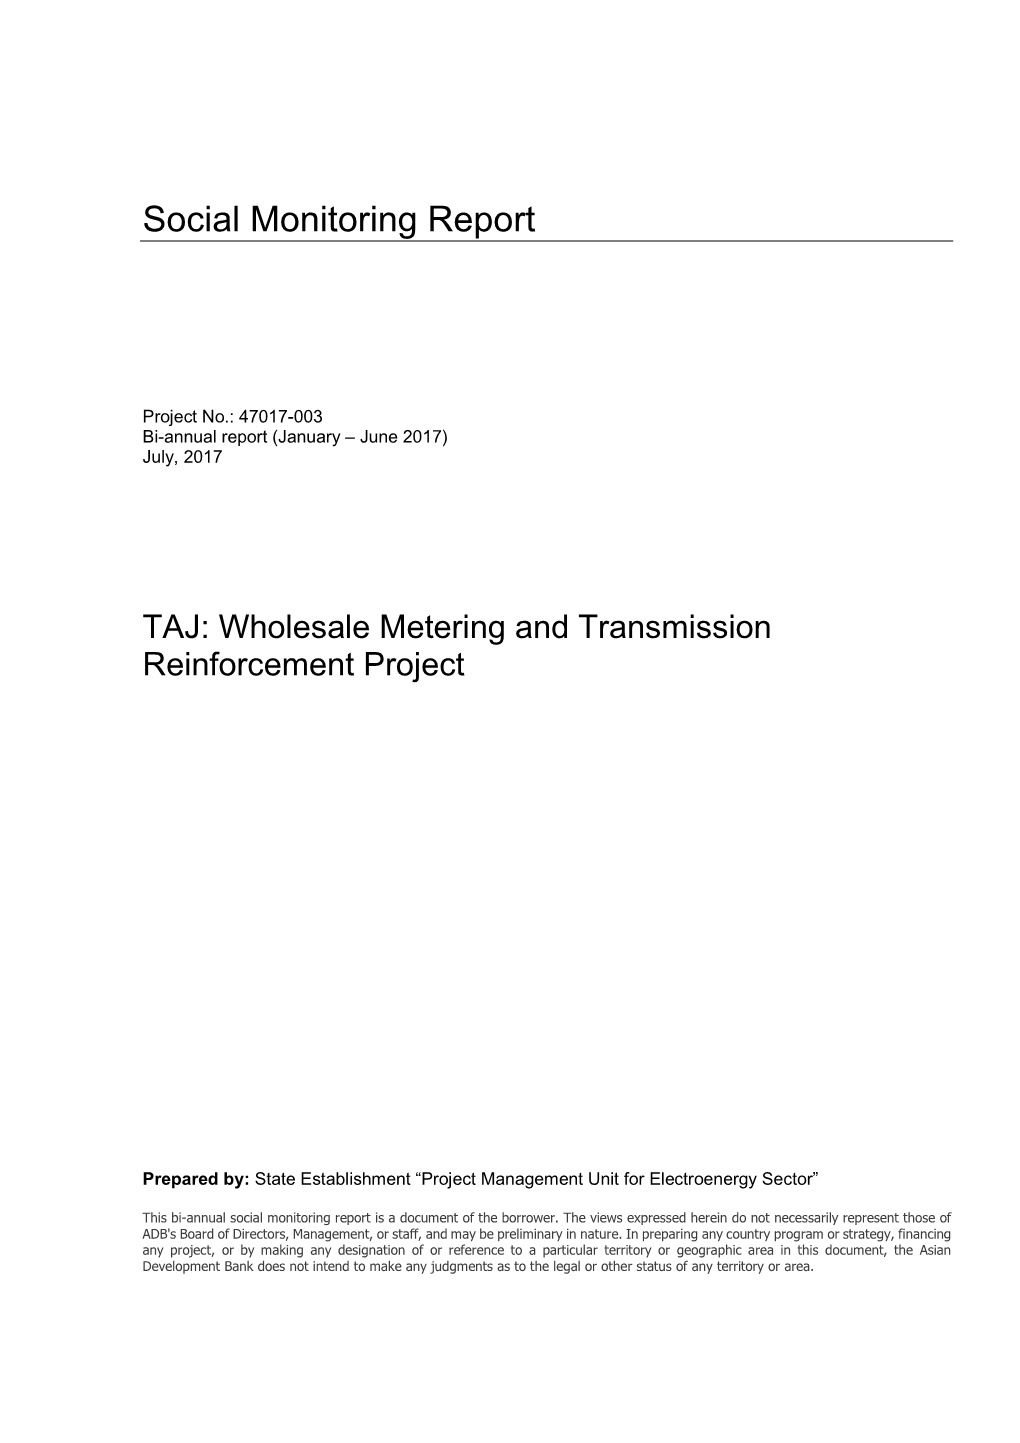 TAJ: Wholesale Metering and Transmission Reinforcement Project